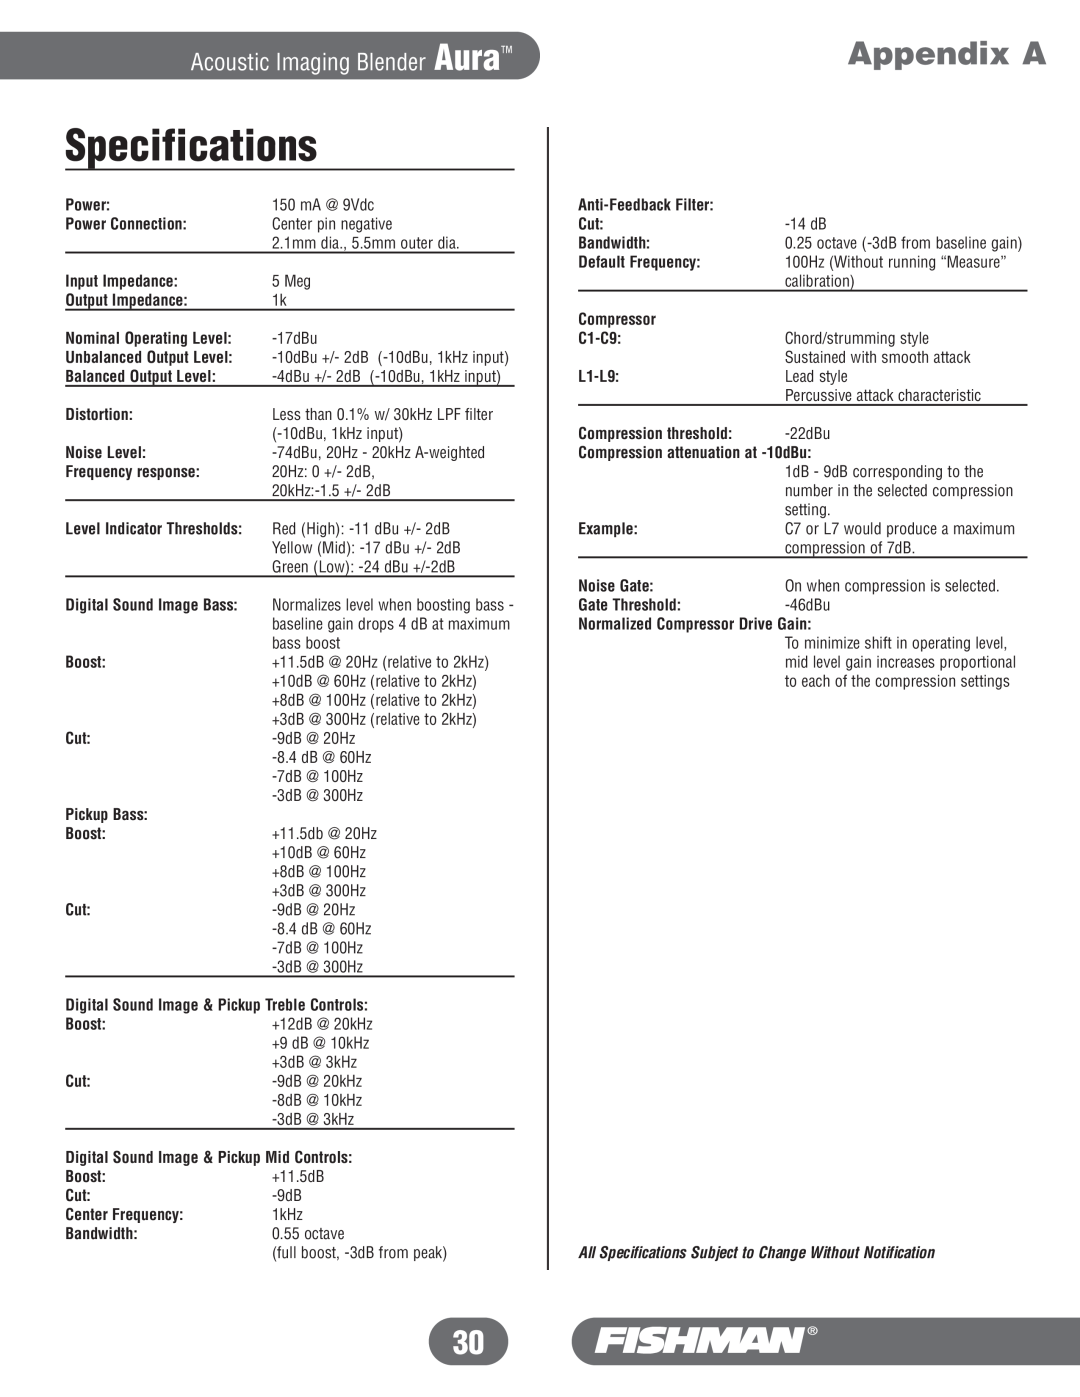 Fishman manual Specifications, Appendix A, Acoustic Imaging Blender Aura 